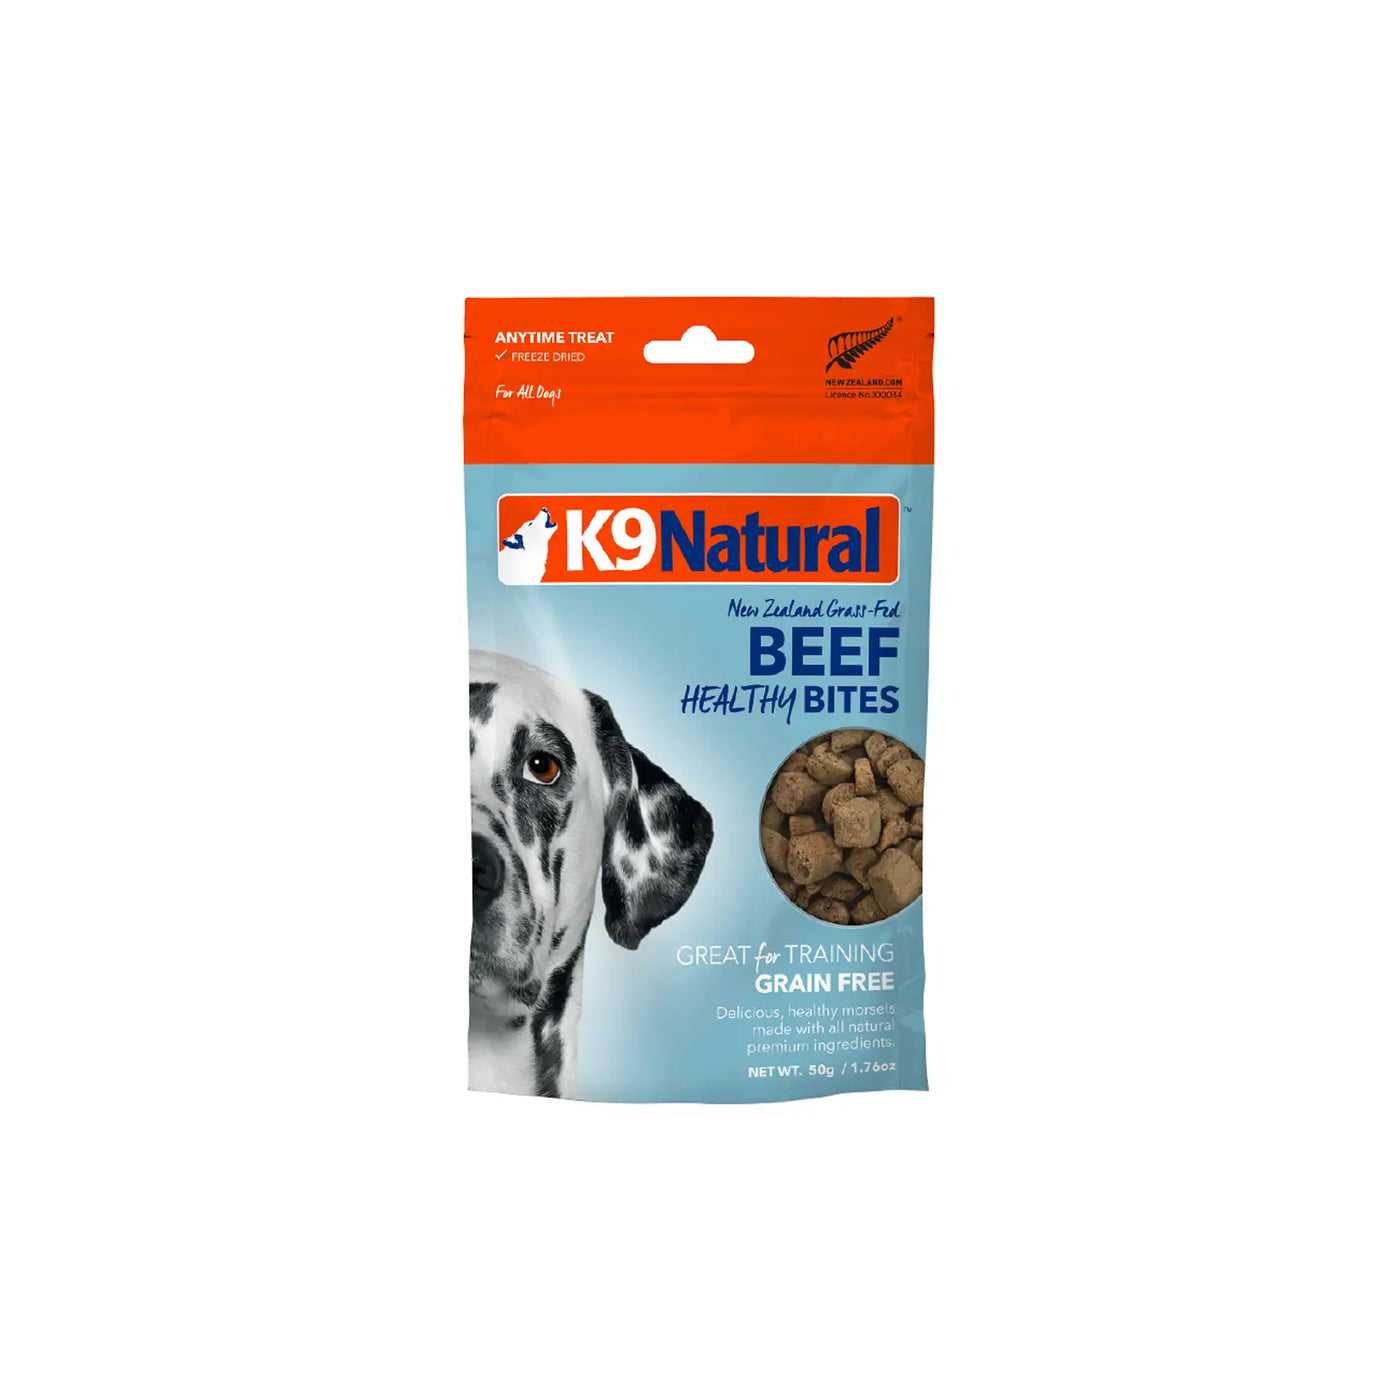 K9 Natural Freeze Dried Dog Treats - Healthy Bites - Beef 50g